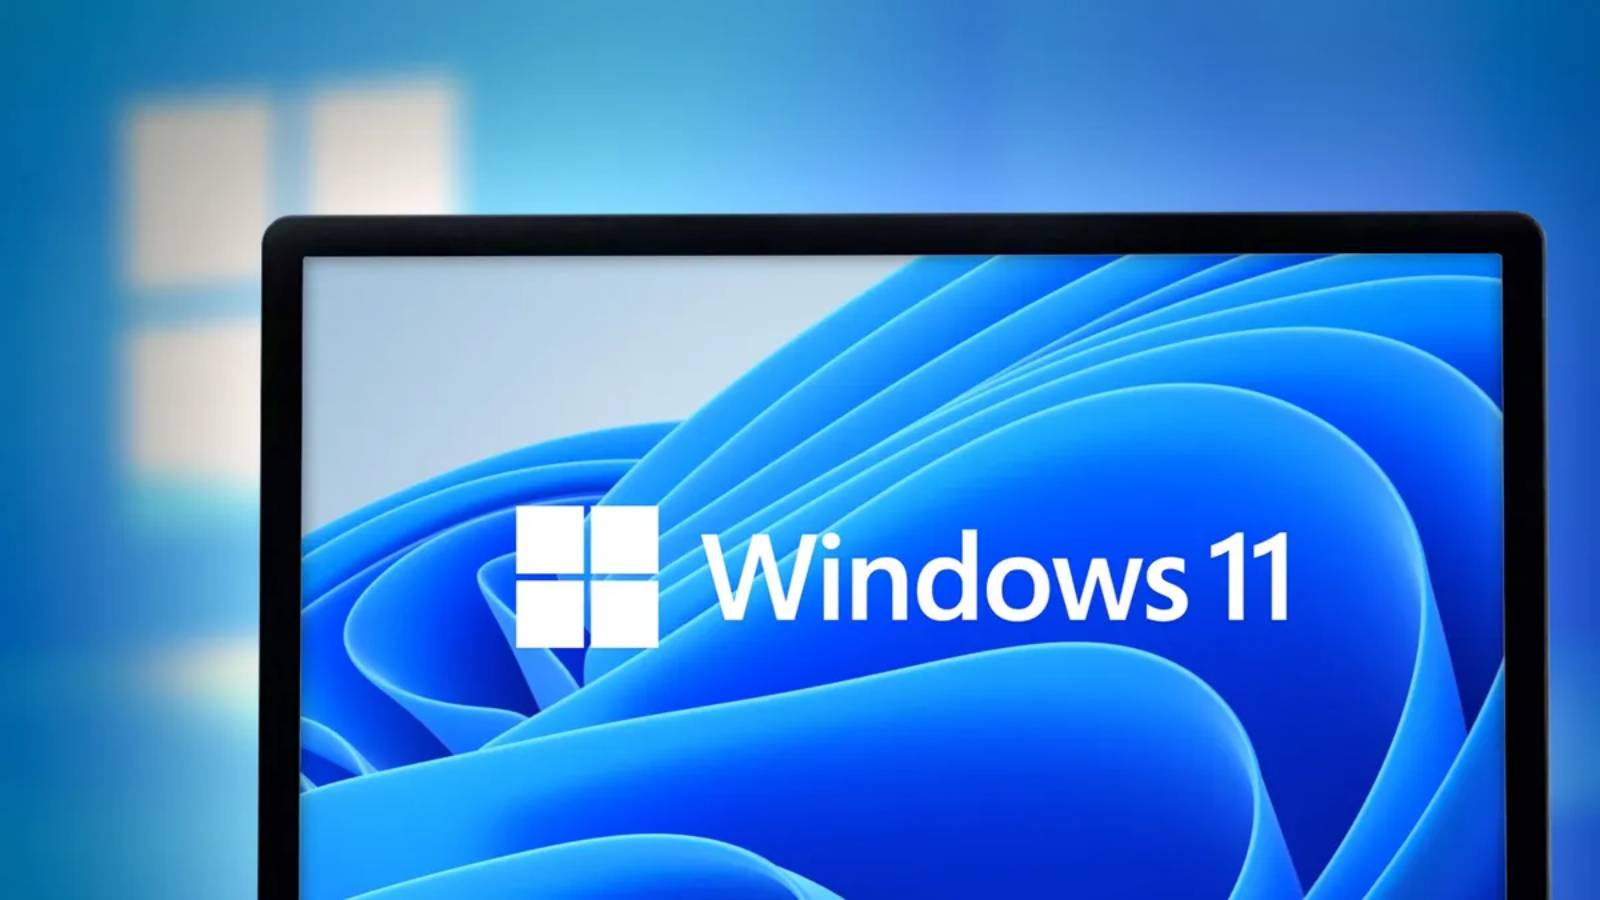 Microsoft's New RADICAL Decision Windows 11 Stuns the World